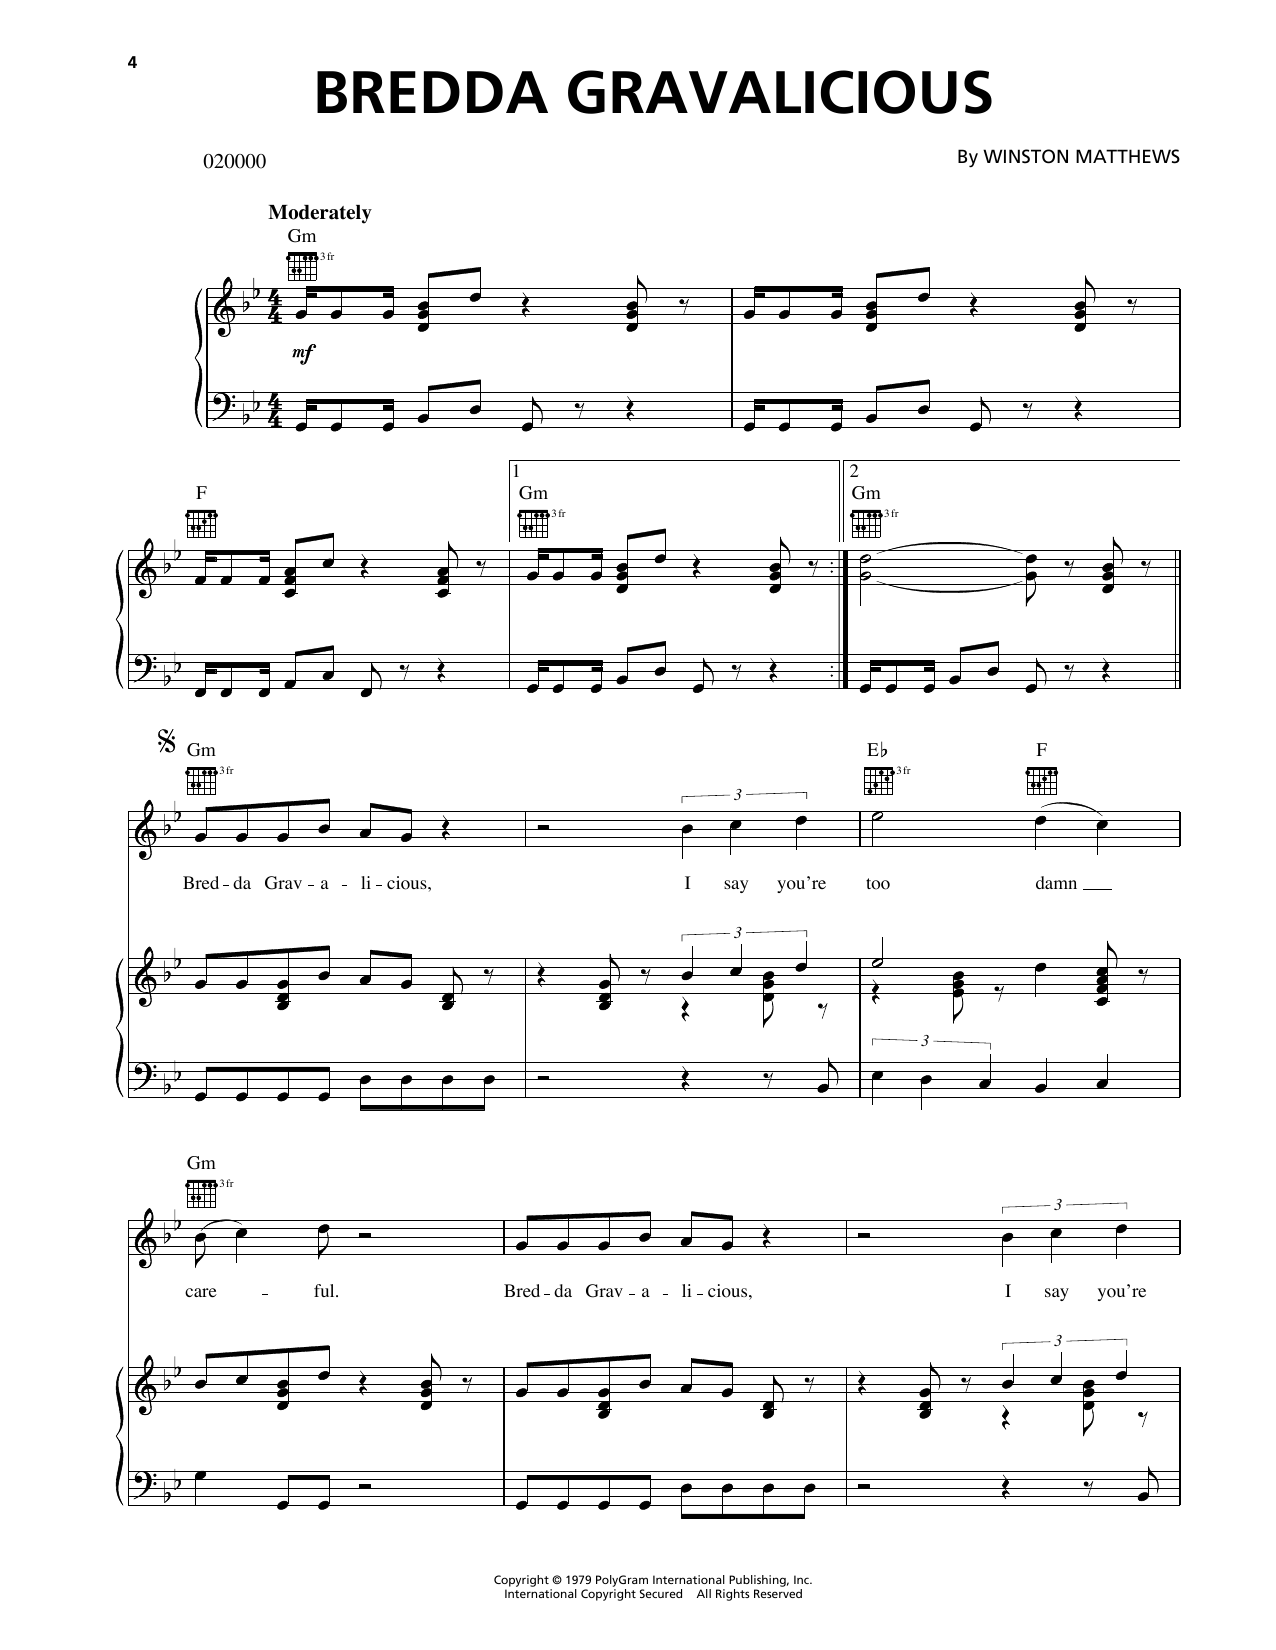 The Wailing Souls Bredda Gravalicious Sheet Music Notes & Chords for Piano, Vocal & Guitar Chords (Right-Hand Melody) - Download or Print PDF